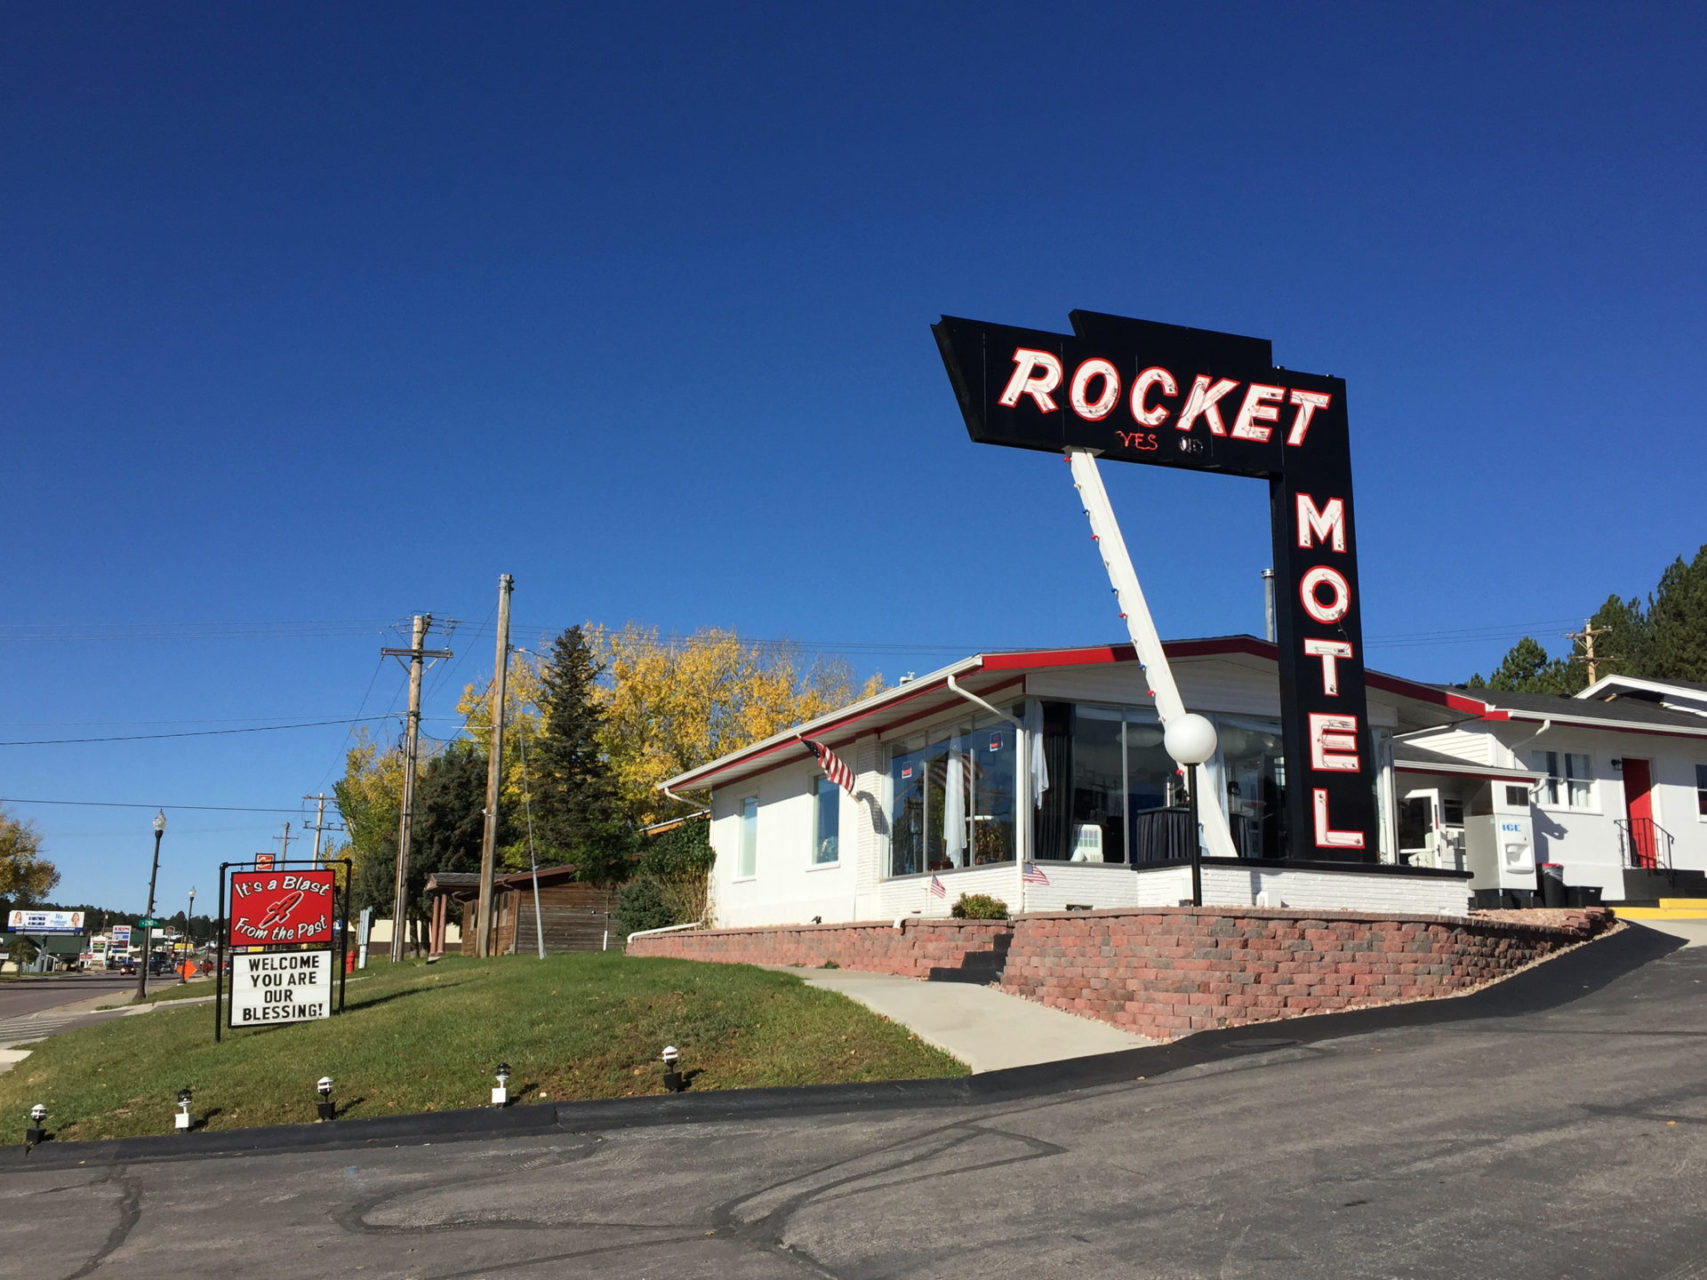 Das Rocket Motel in South Dakota ist ein Klassiker